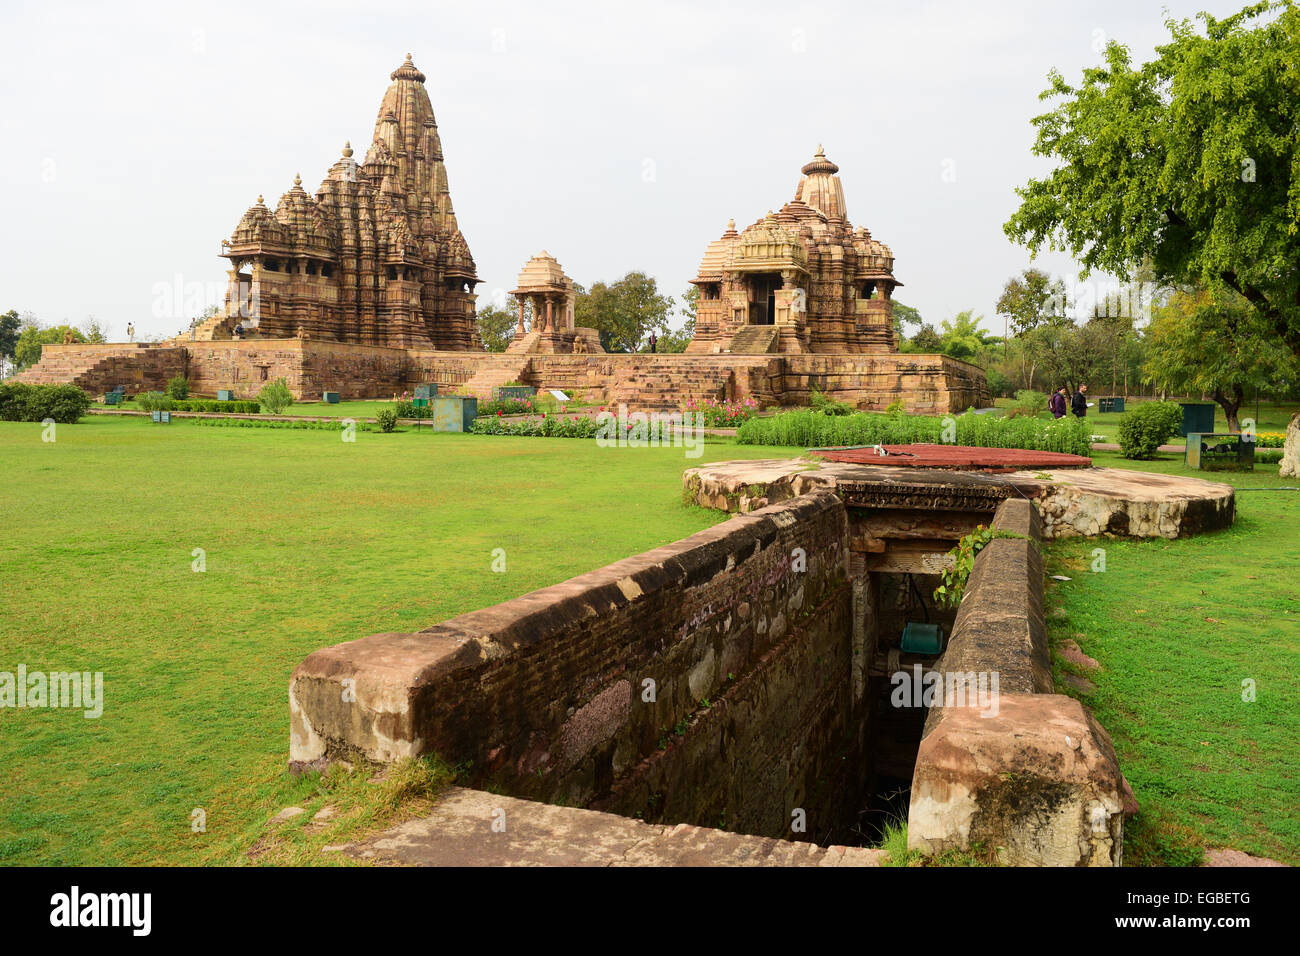 Khajuraho Group of Monuments Khajuraho Temples India UNESCO World Heritage site India Stock Photo